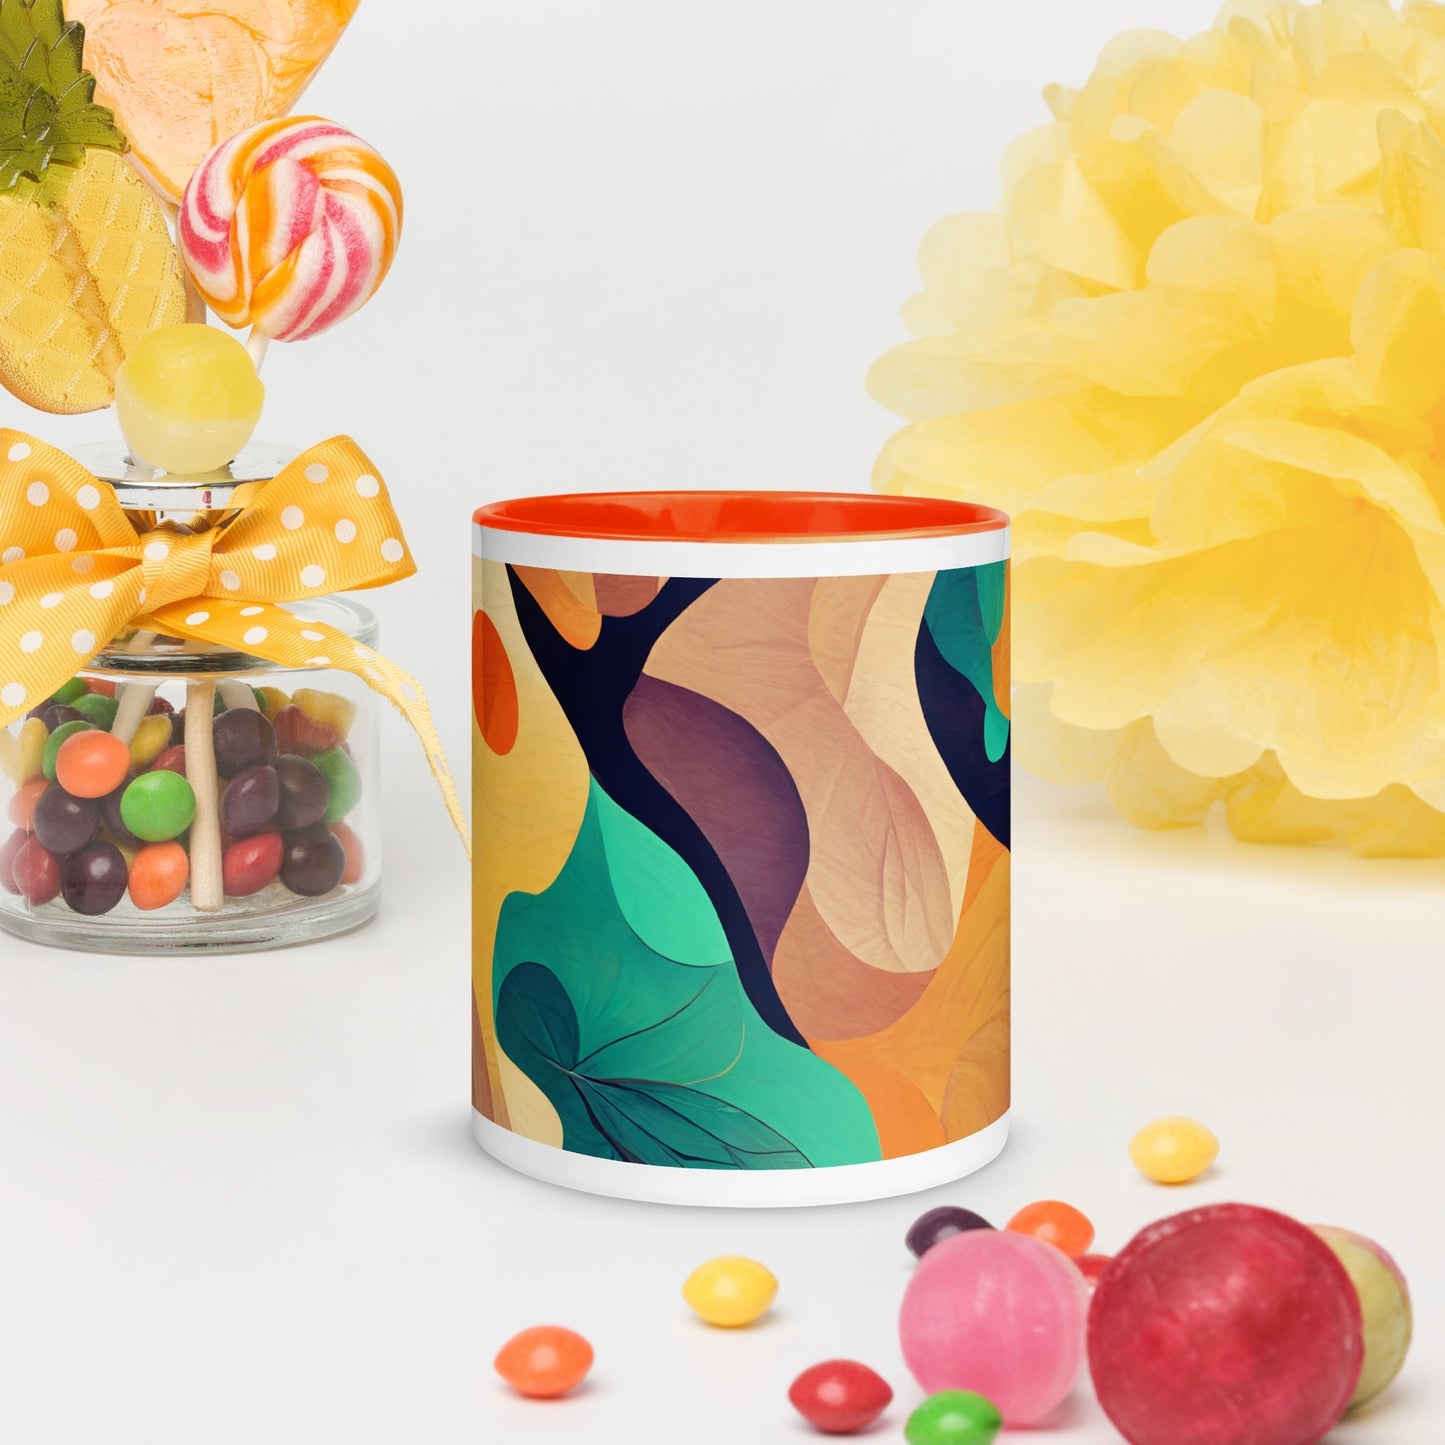 Cocktail Ceramic Mug with Color Inside